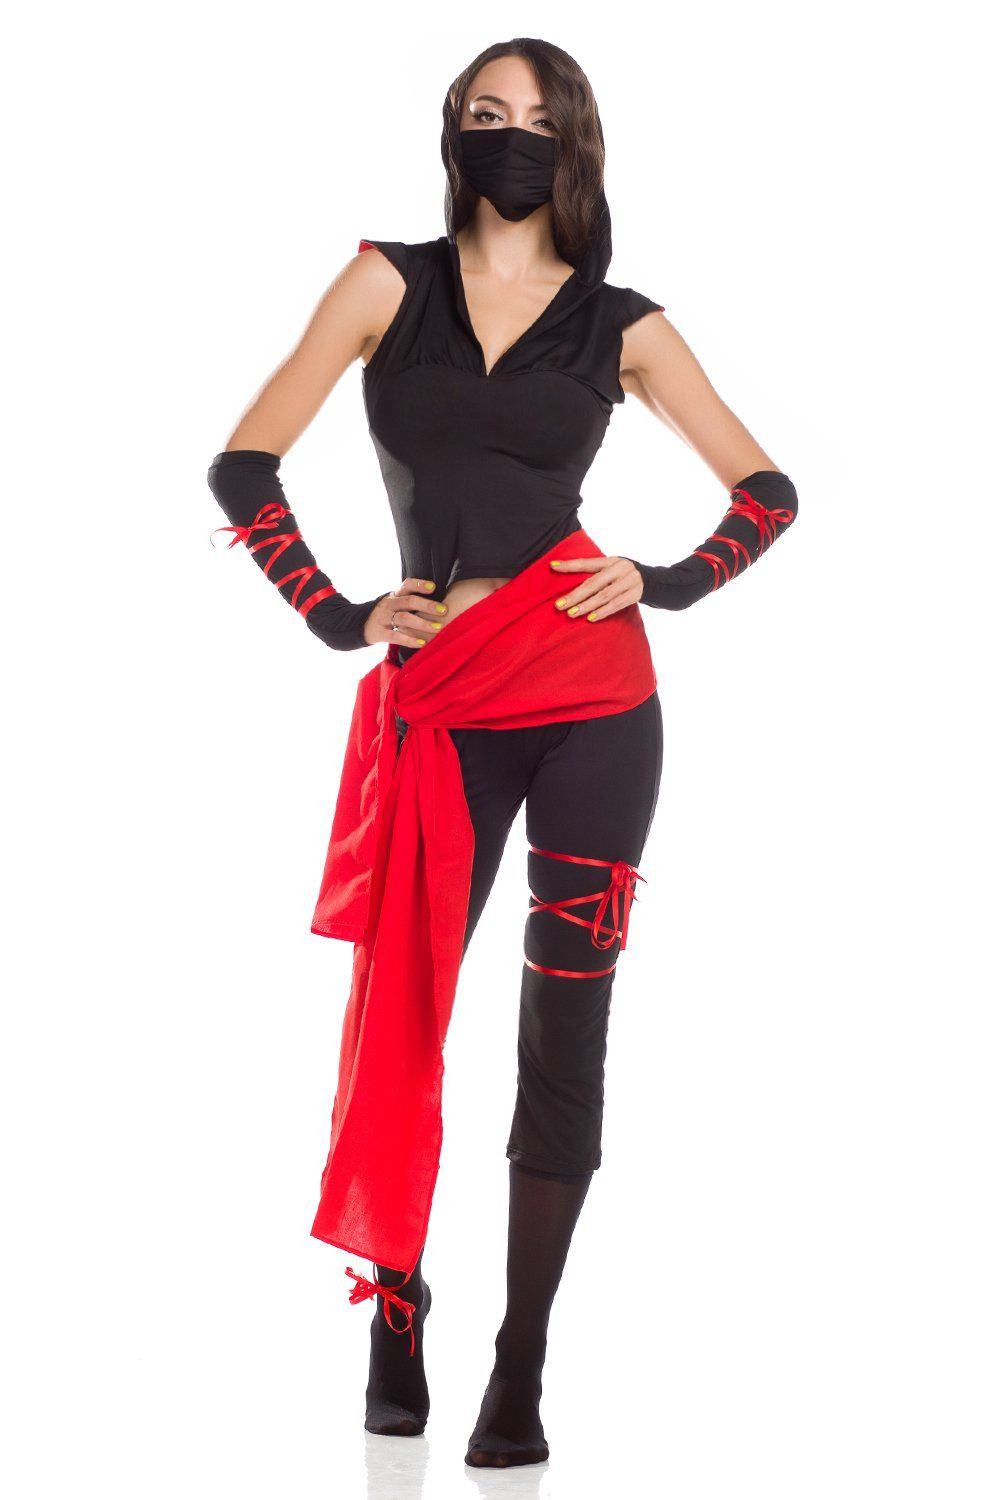 Best ideas about DIY Woman Ninja Costume
. Save or Pin Amazon Ninimour Deadly Ninja Catsuit Waist Sash Arm Now.